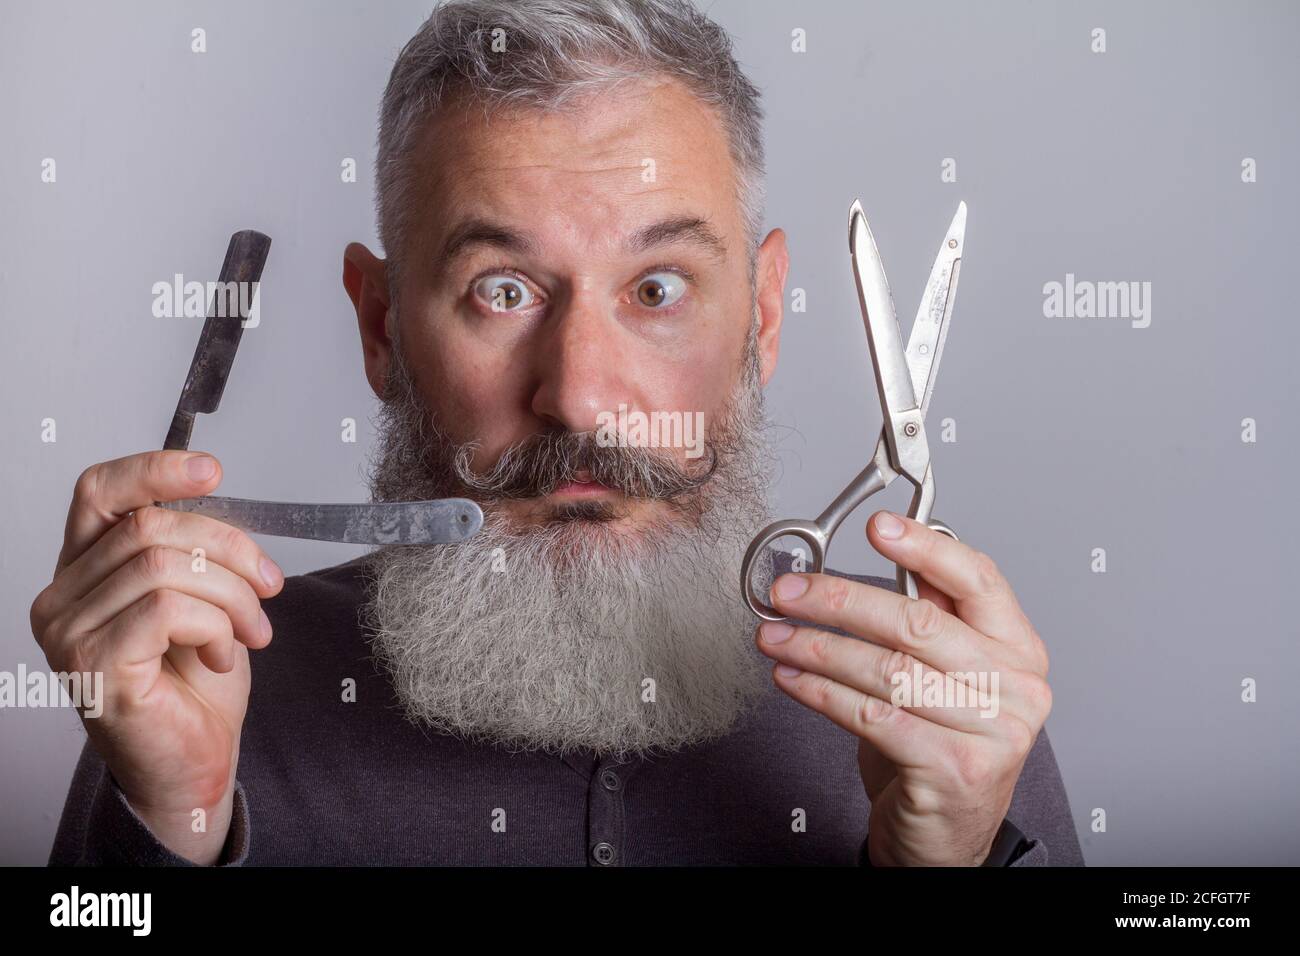 Portrait of mature bearded man with retro razor and scissors, barbershop concept, selective focus Stock Photo